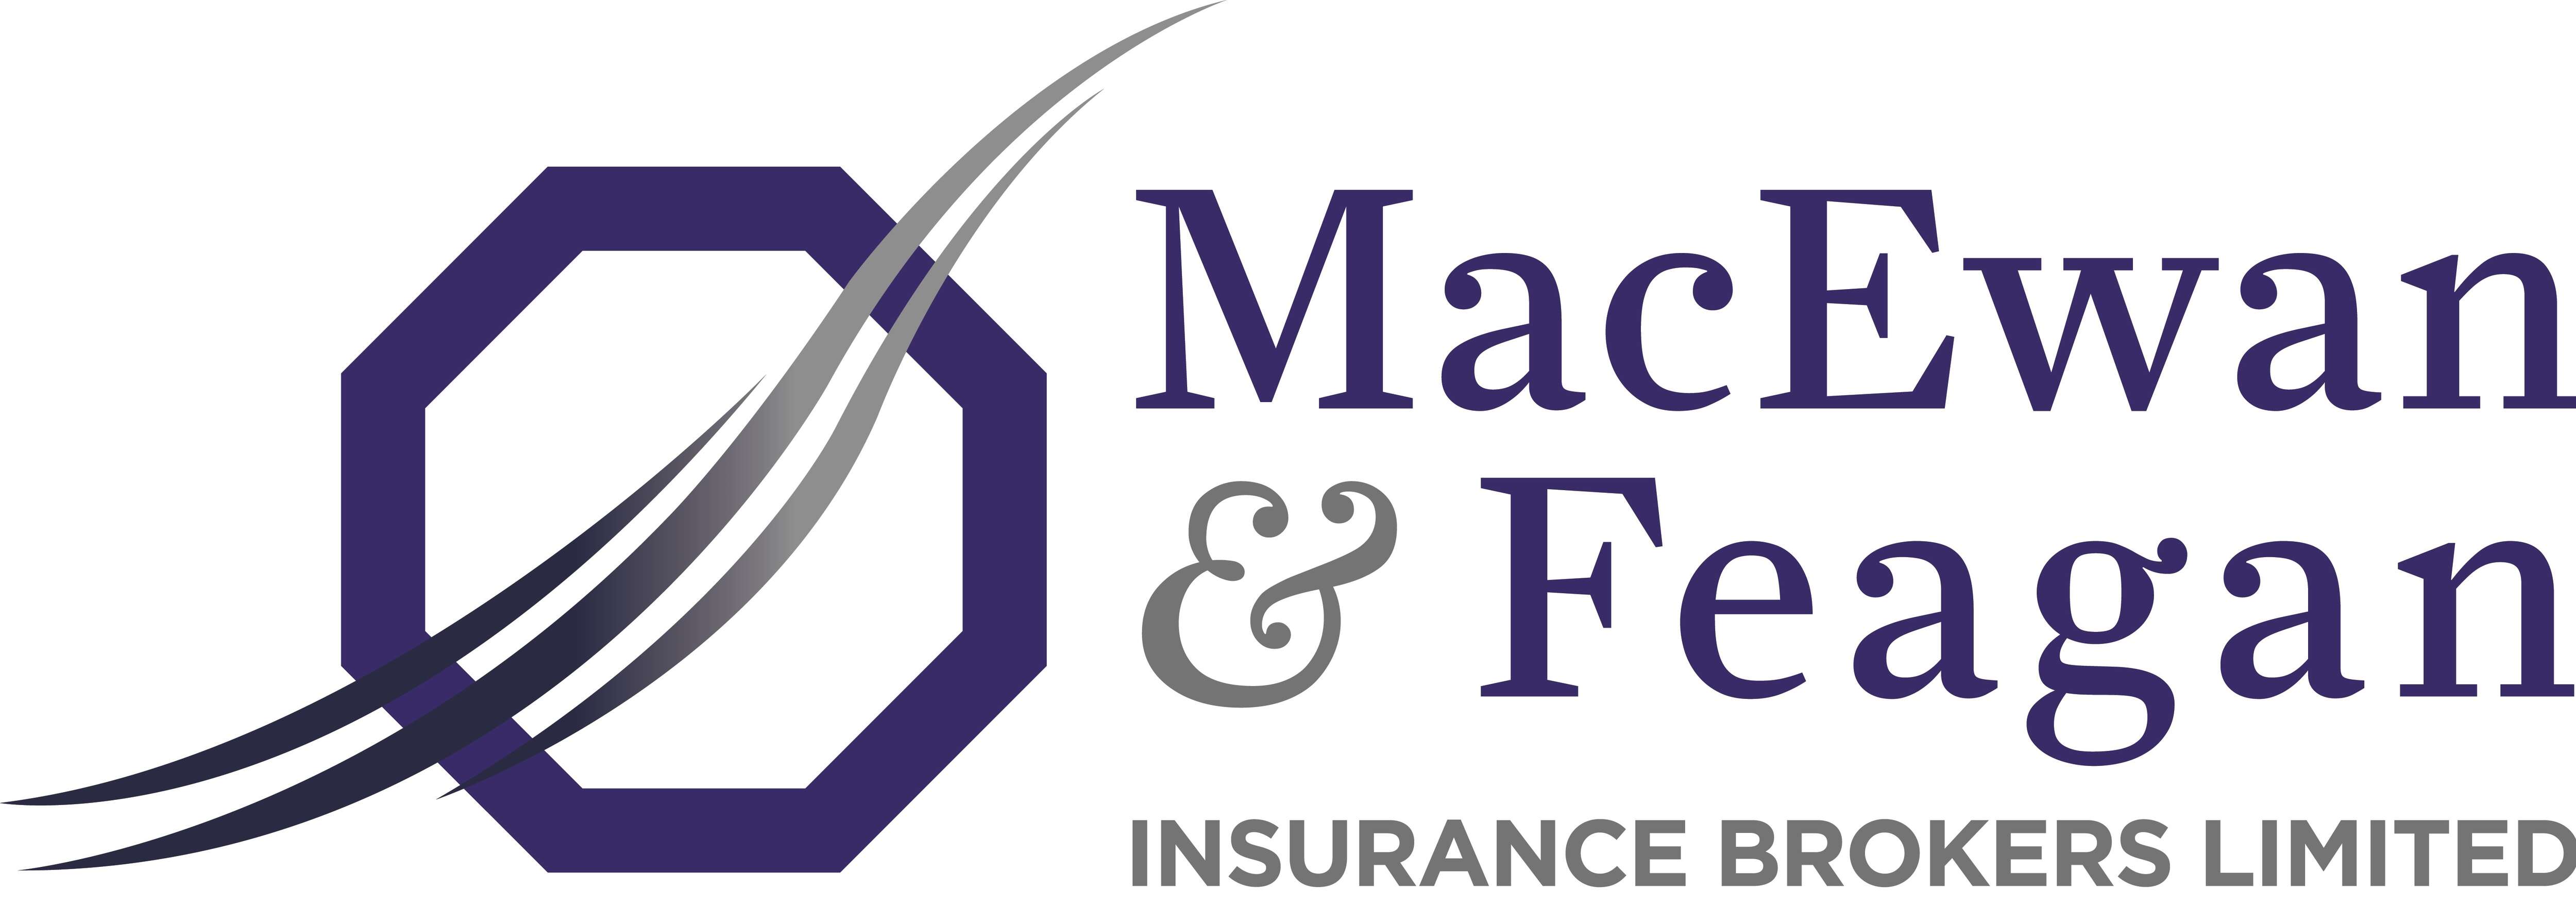 M&F Insurance